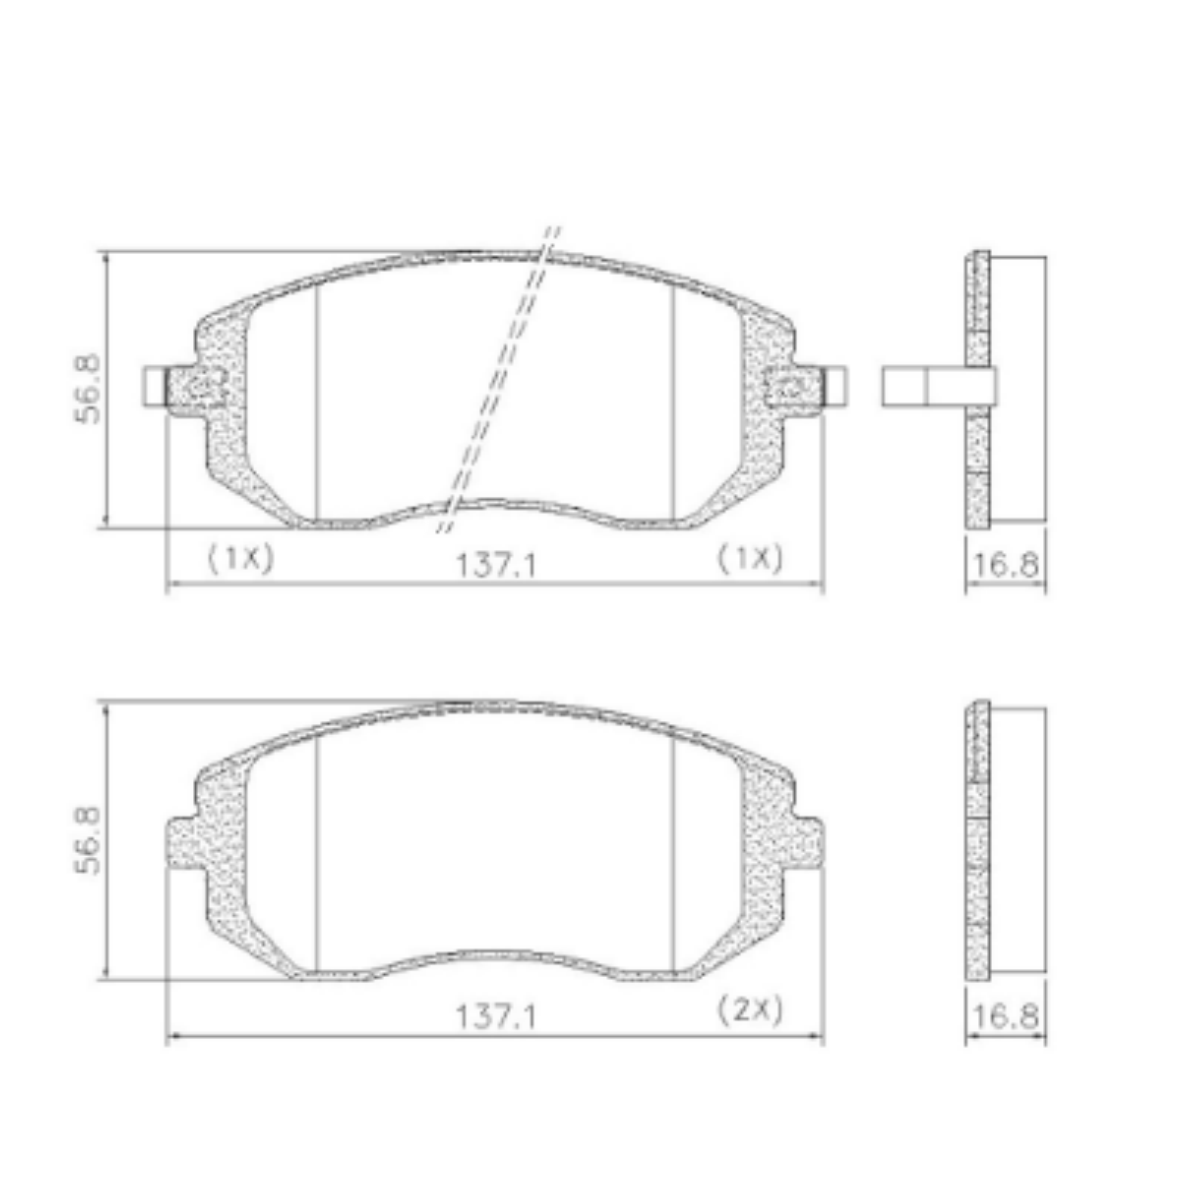 Pastilha Freio Subaru Impreza 2.5 16v Wrx 01/2010 Ate 12/2015 Dianteira Sistema Tokico, Ceramica Fras-le Pd-749-cmaxx